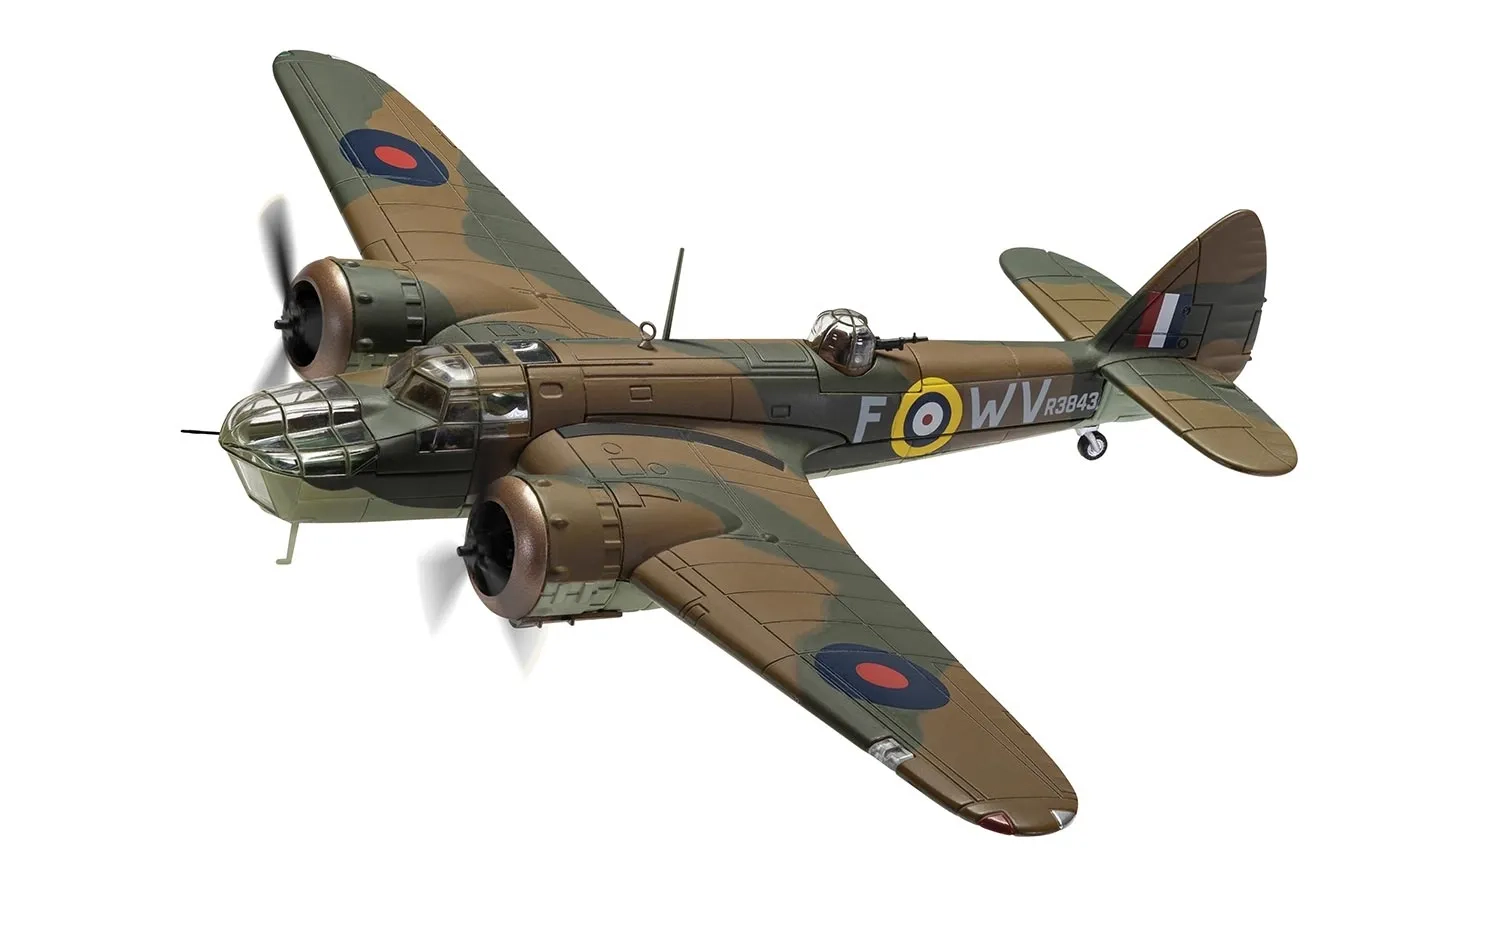 Bristol Blenheim Mk.IV R3843  F for Freddie , RAF No.18 Squadron.  Operation Leg , Douglas Bader, 19th August, 1941